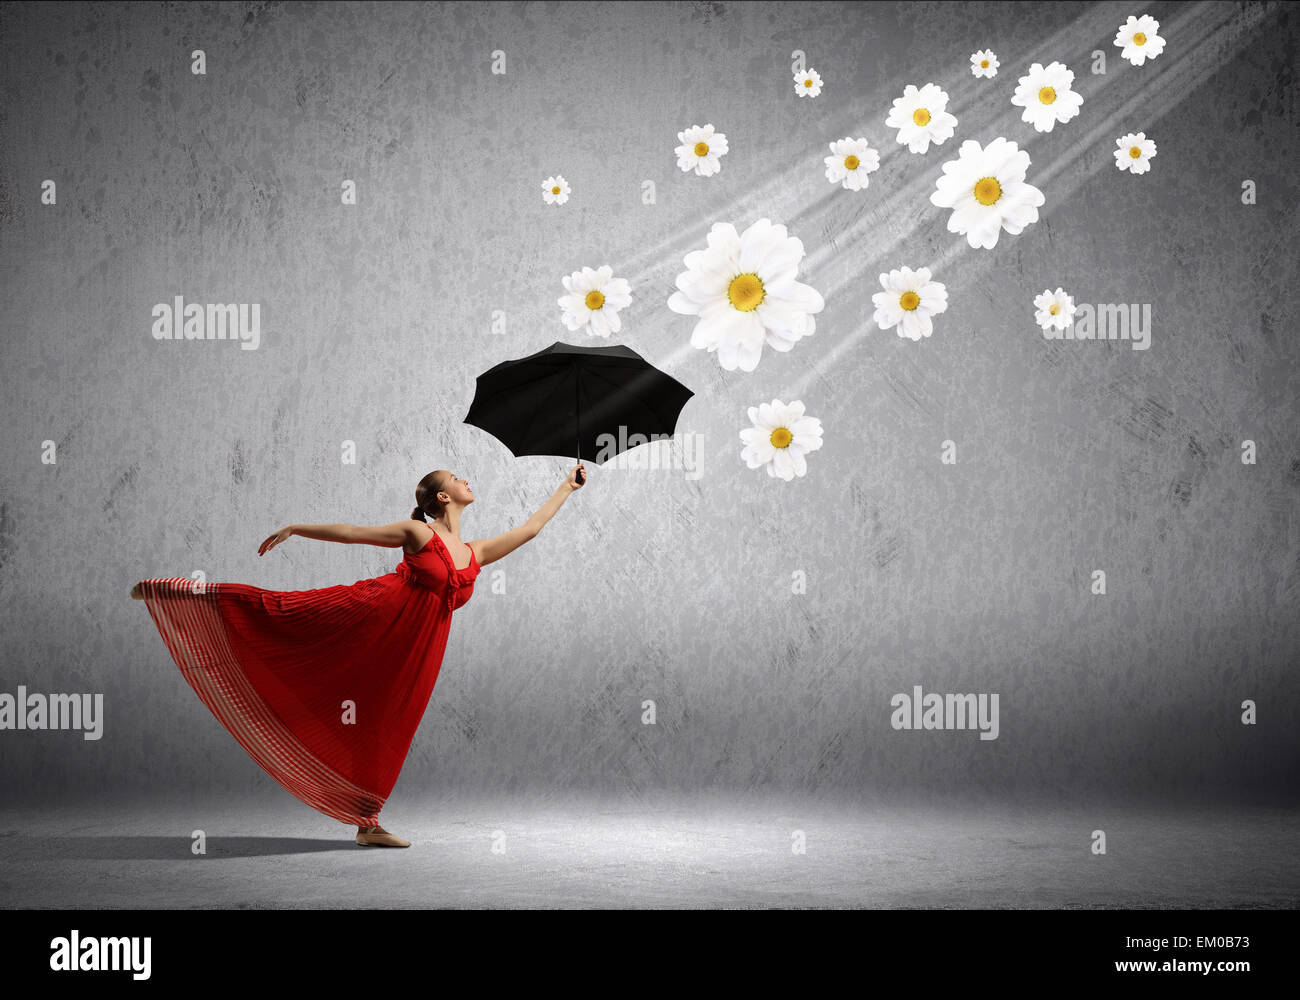 Ballerina umbrella hi-res stock photography and images - Alamy